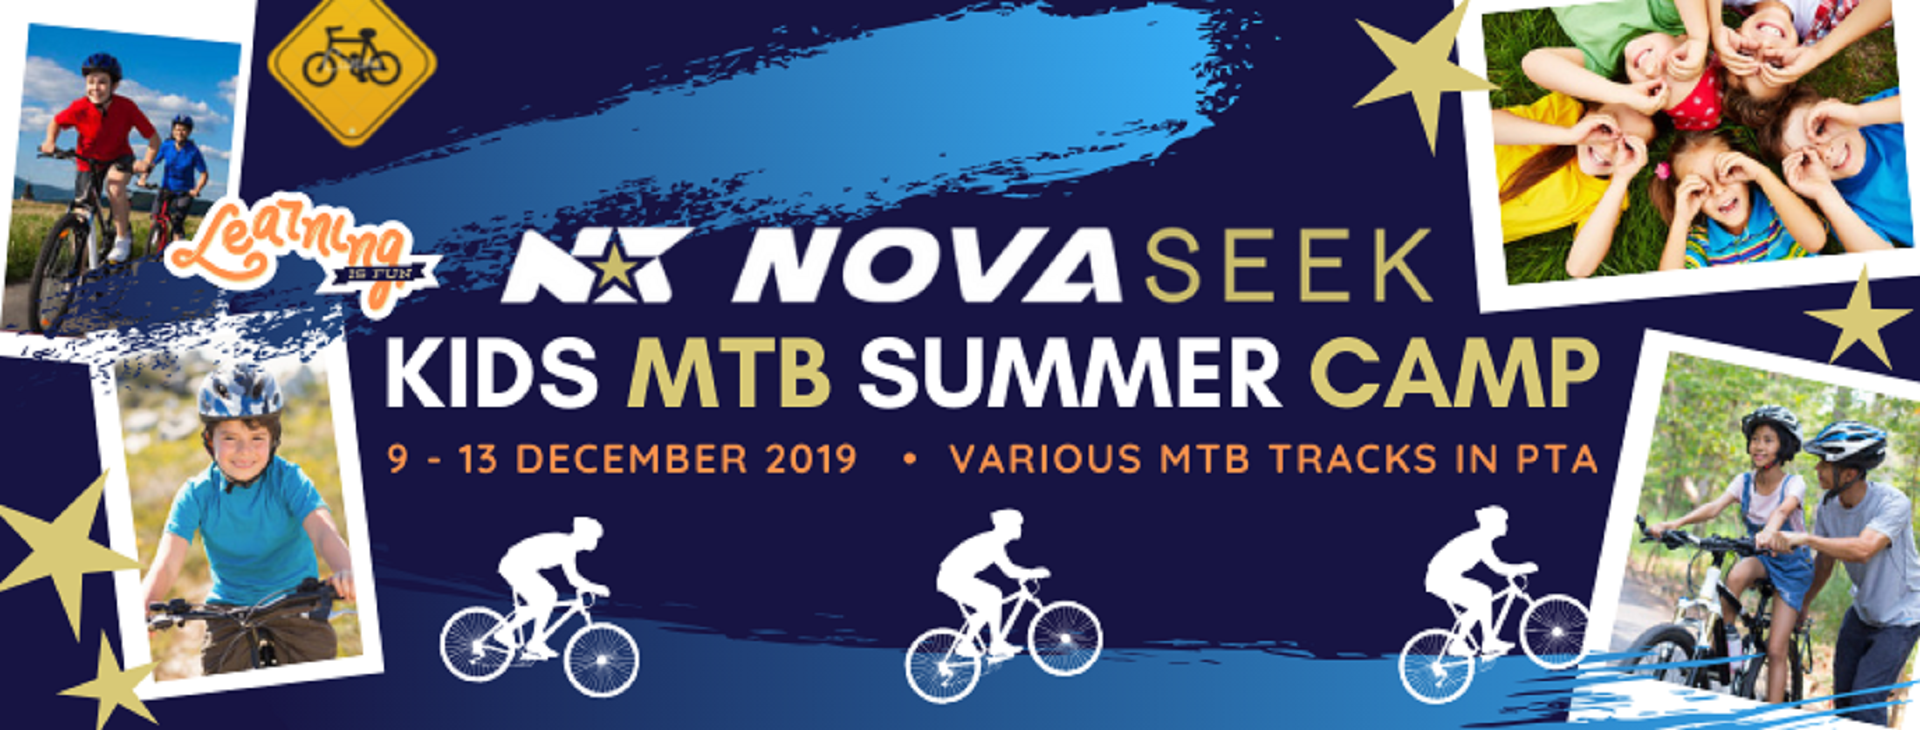 Novaseek Kids MTB Summer Camp 2019